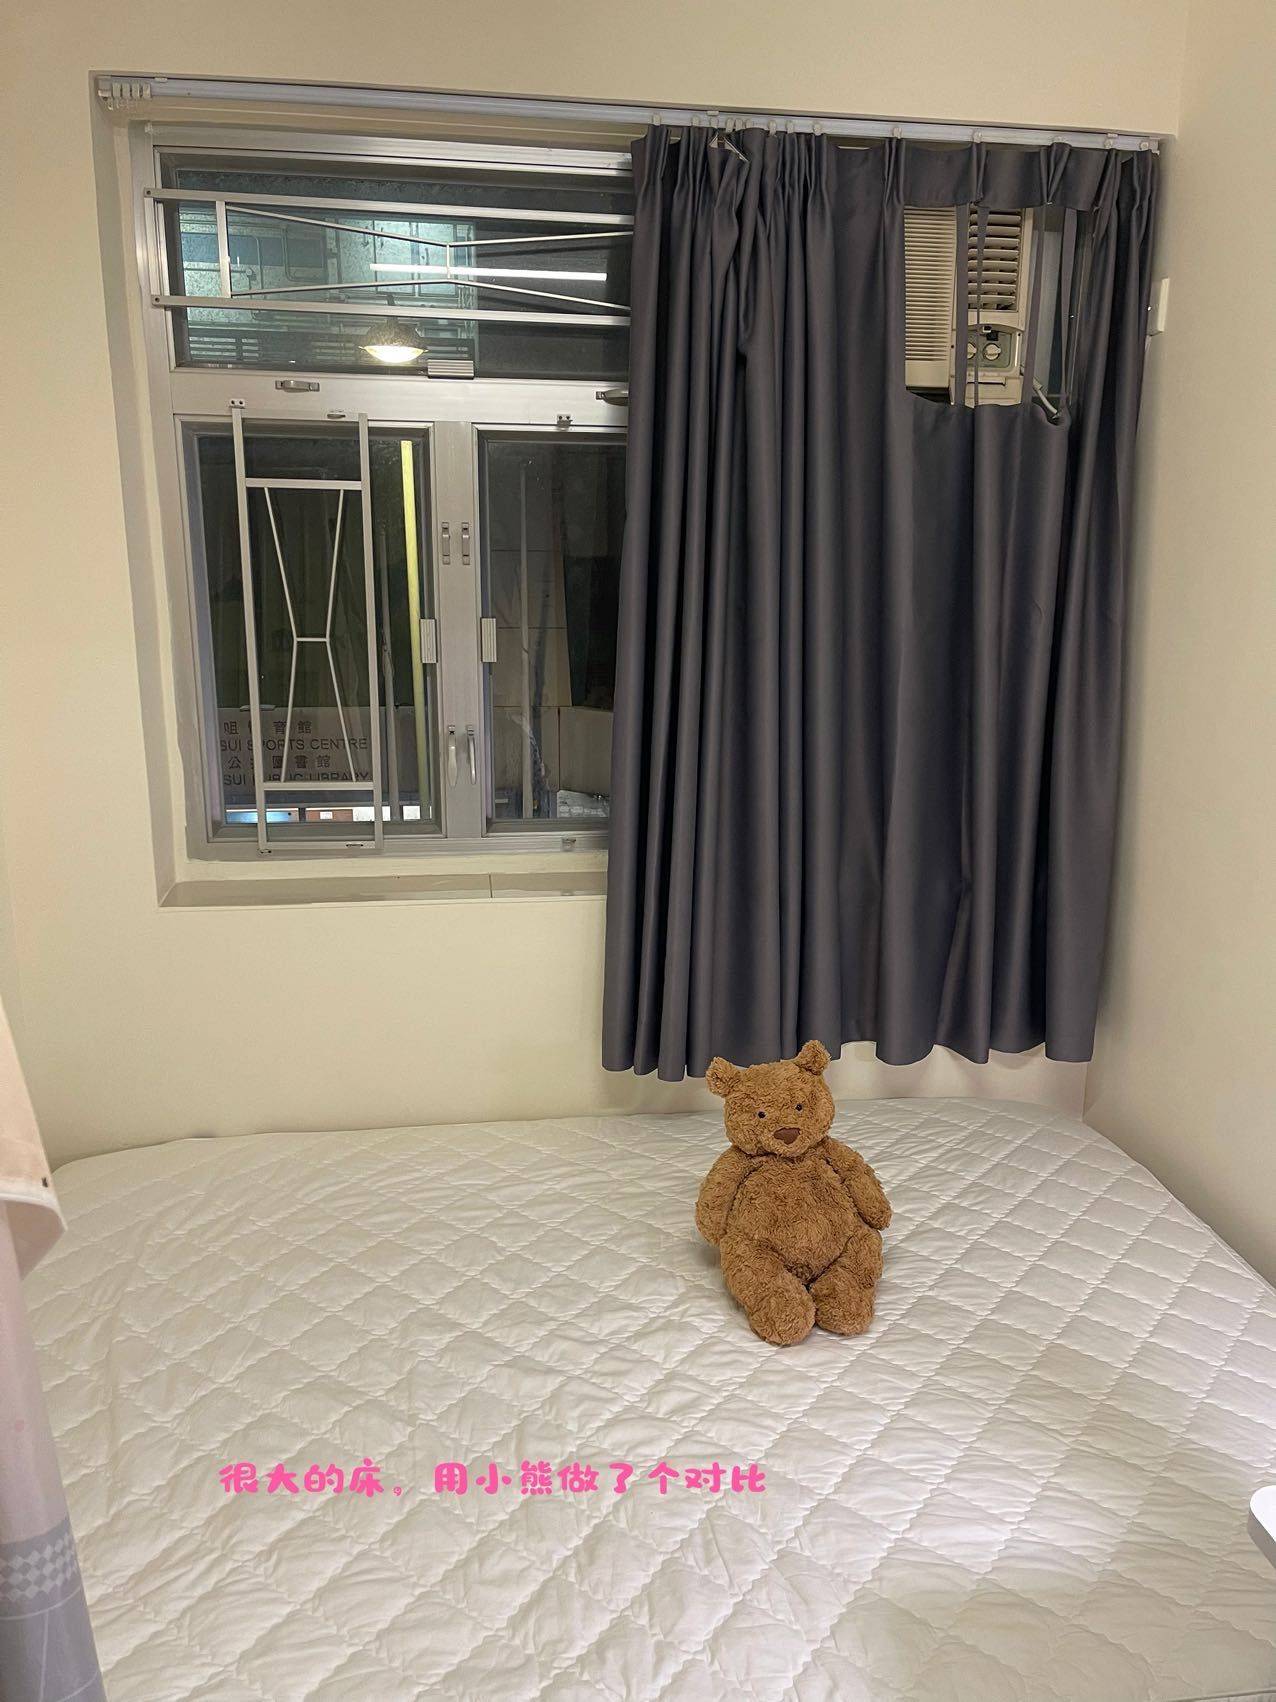 Hong Kong-Hong Kong Island-Cozy Home,Clean&Comfy,No Gender Limit,Pet Friendly